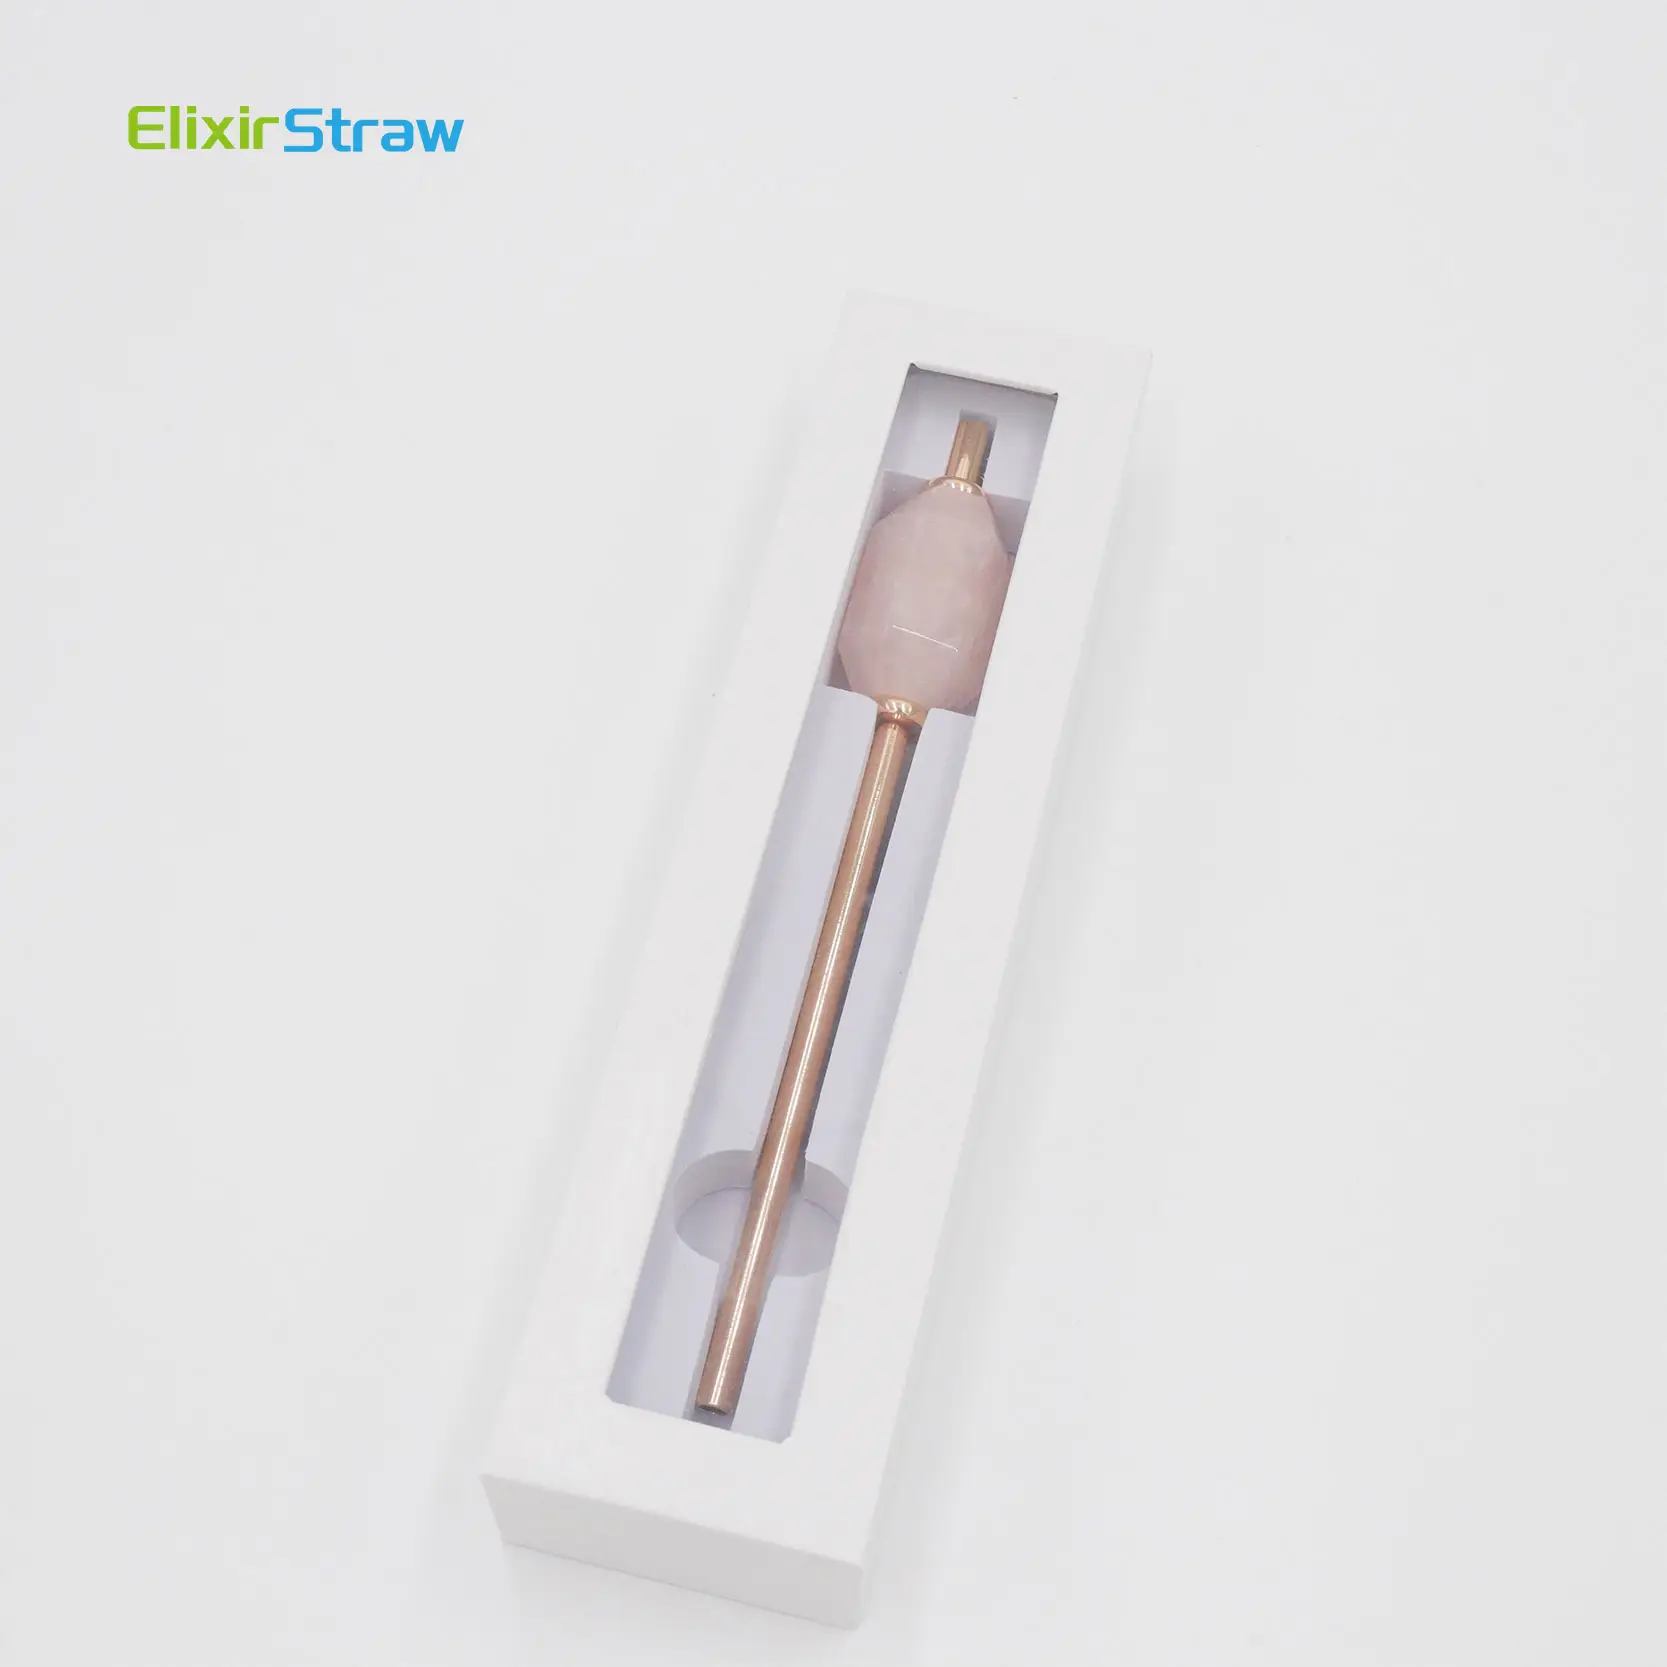 ElixirStraw แก้วควอตซ์8Mm,หลอดคริสตัลเหลวหกเหลี่ยมทำจากสเตนเลสสตีลอะเมทิสต์